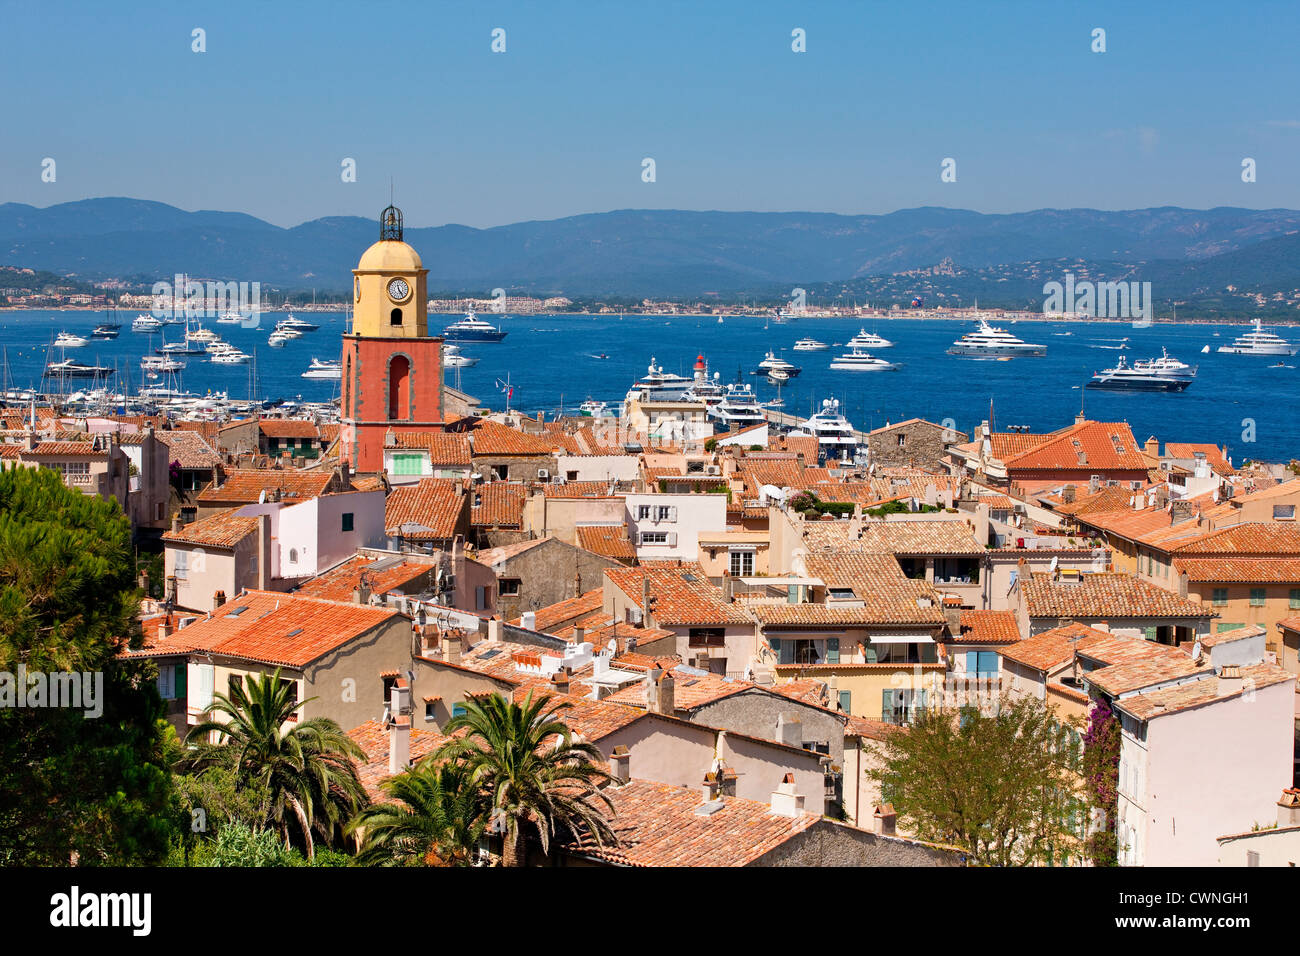 Saint Tropez, French Riviera, Cote d' Azur, France Stock Photo